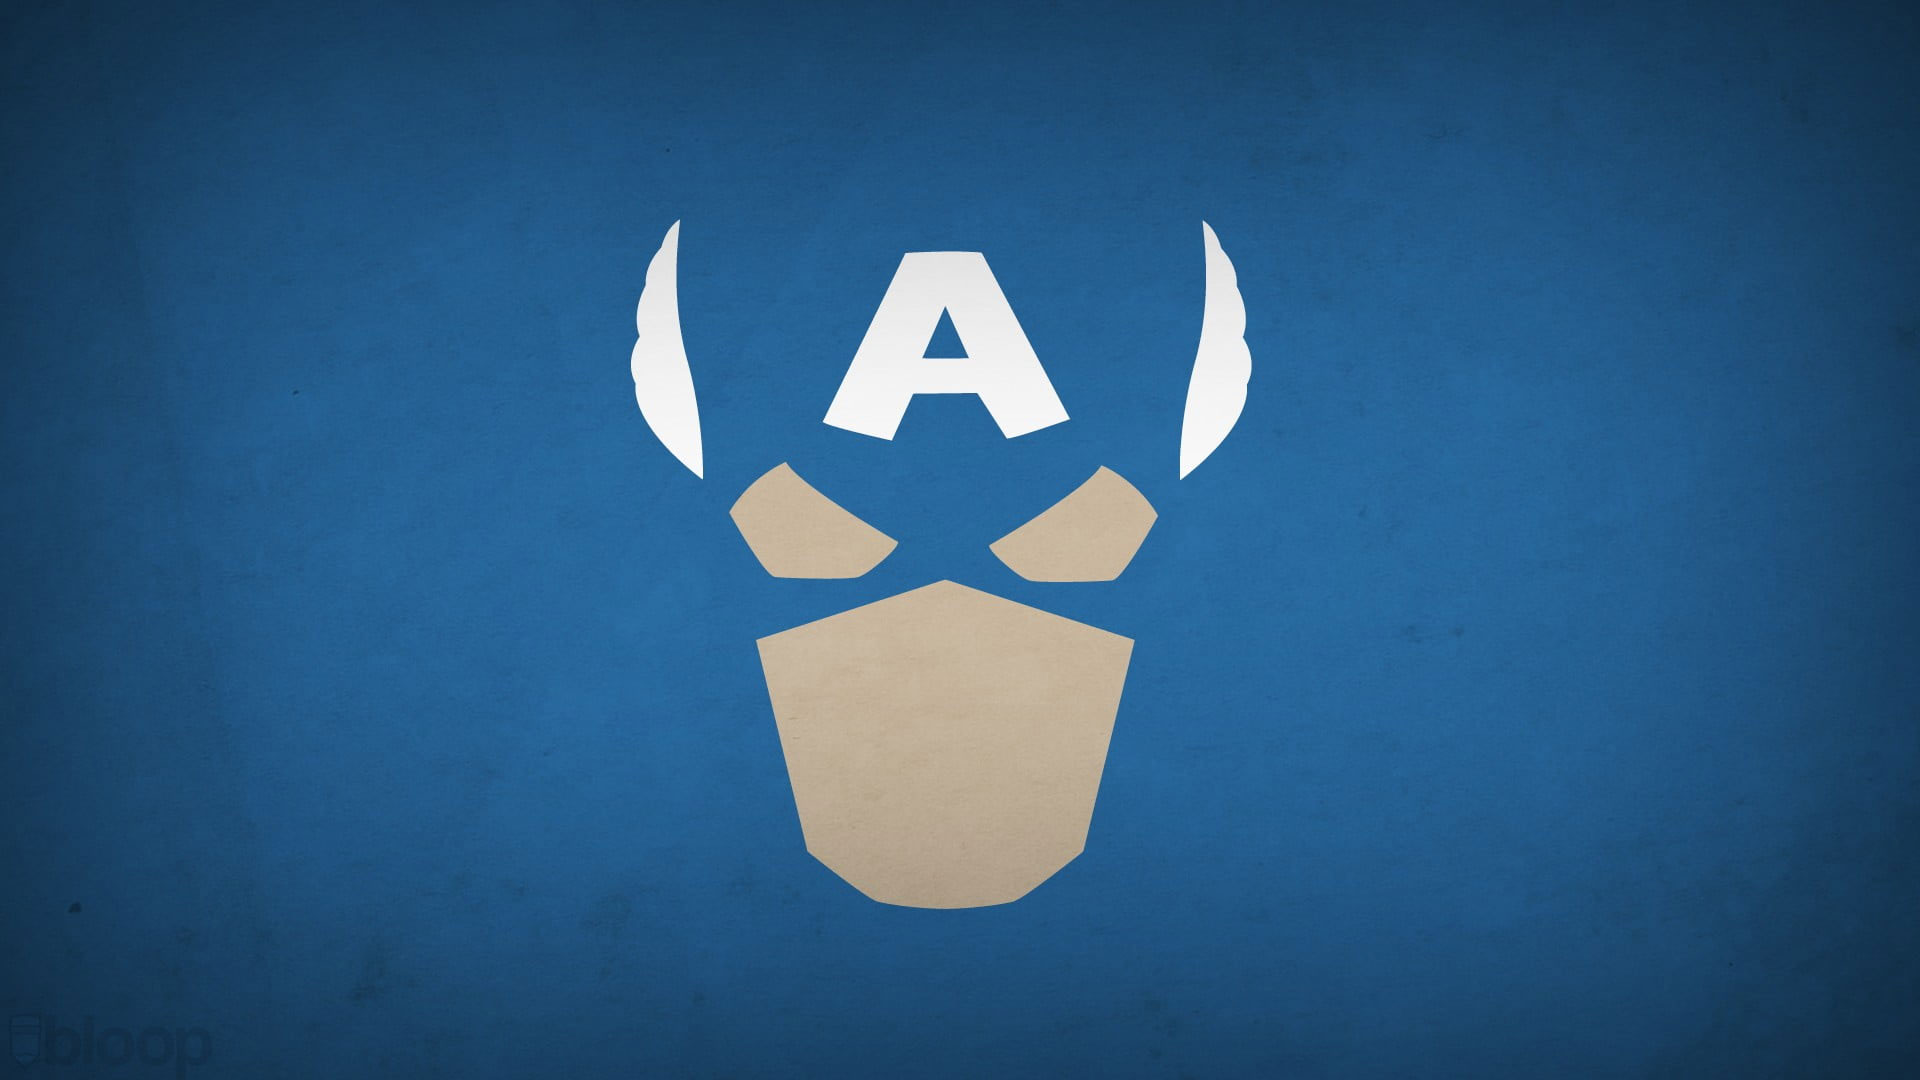 Captain America minimalist wallpaper, Marvel